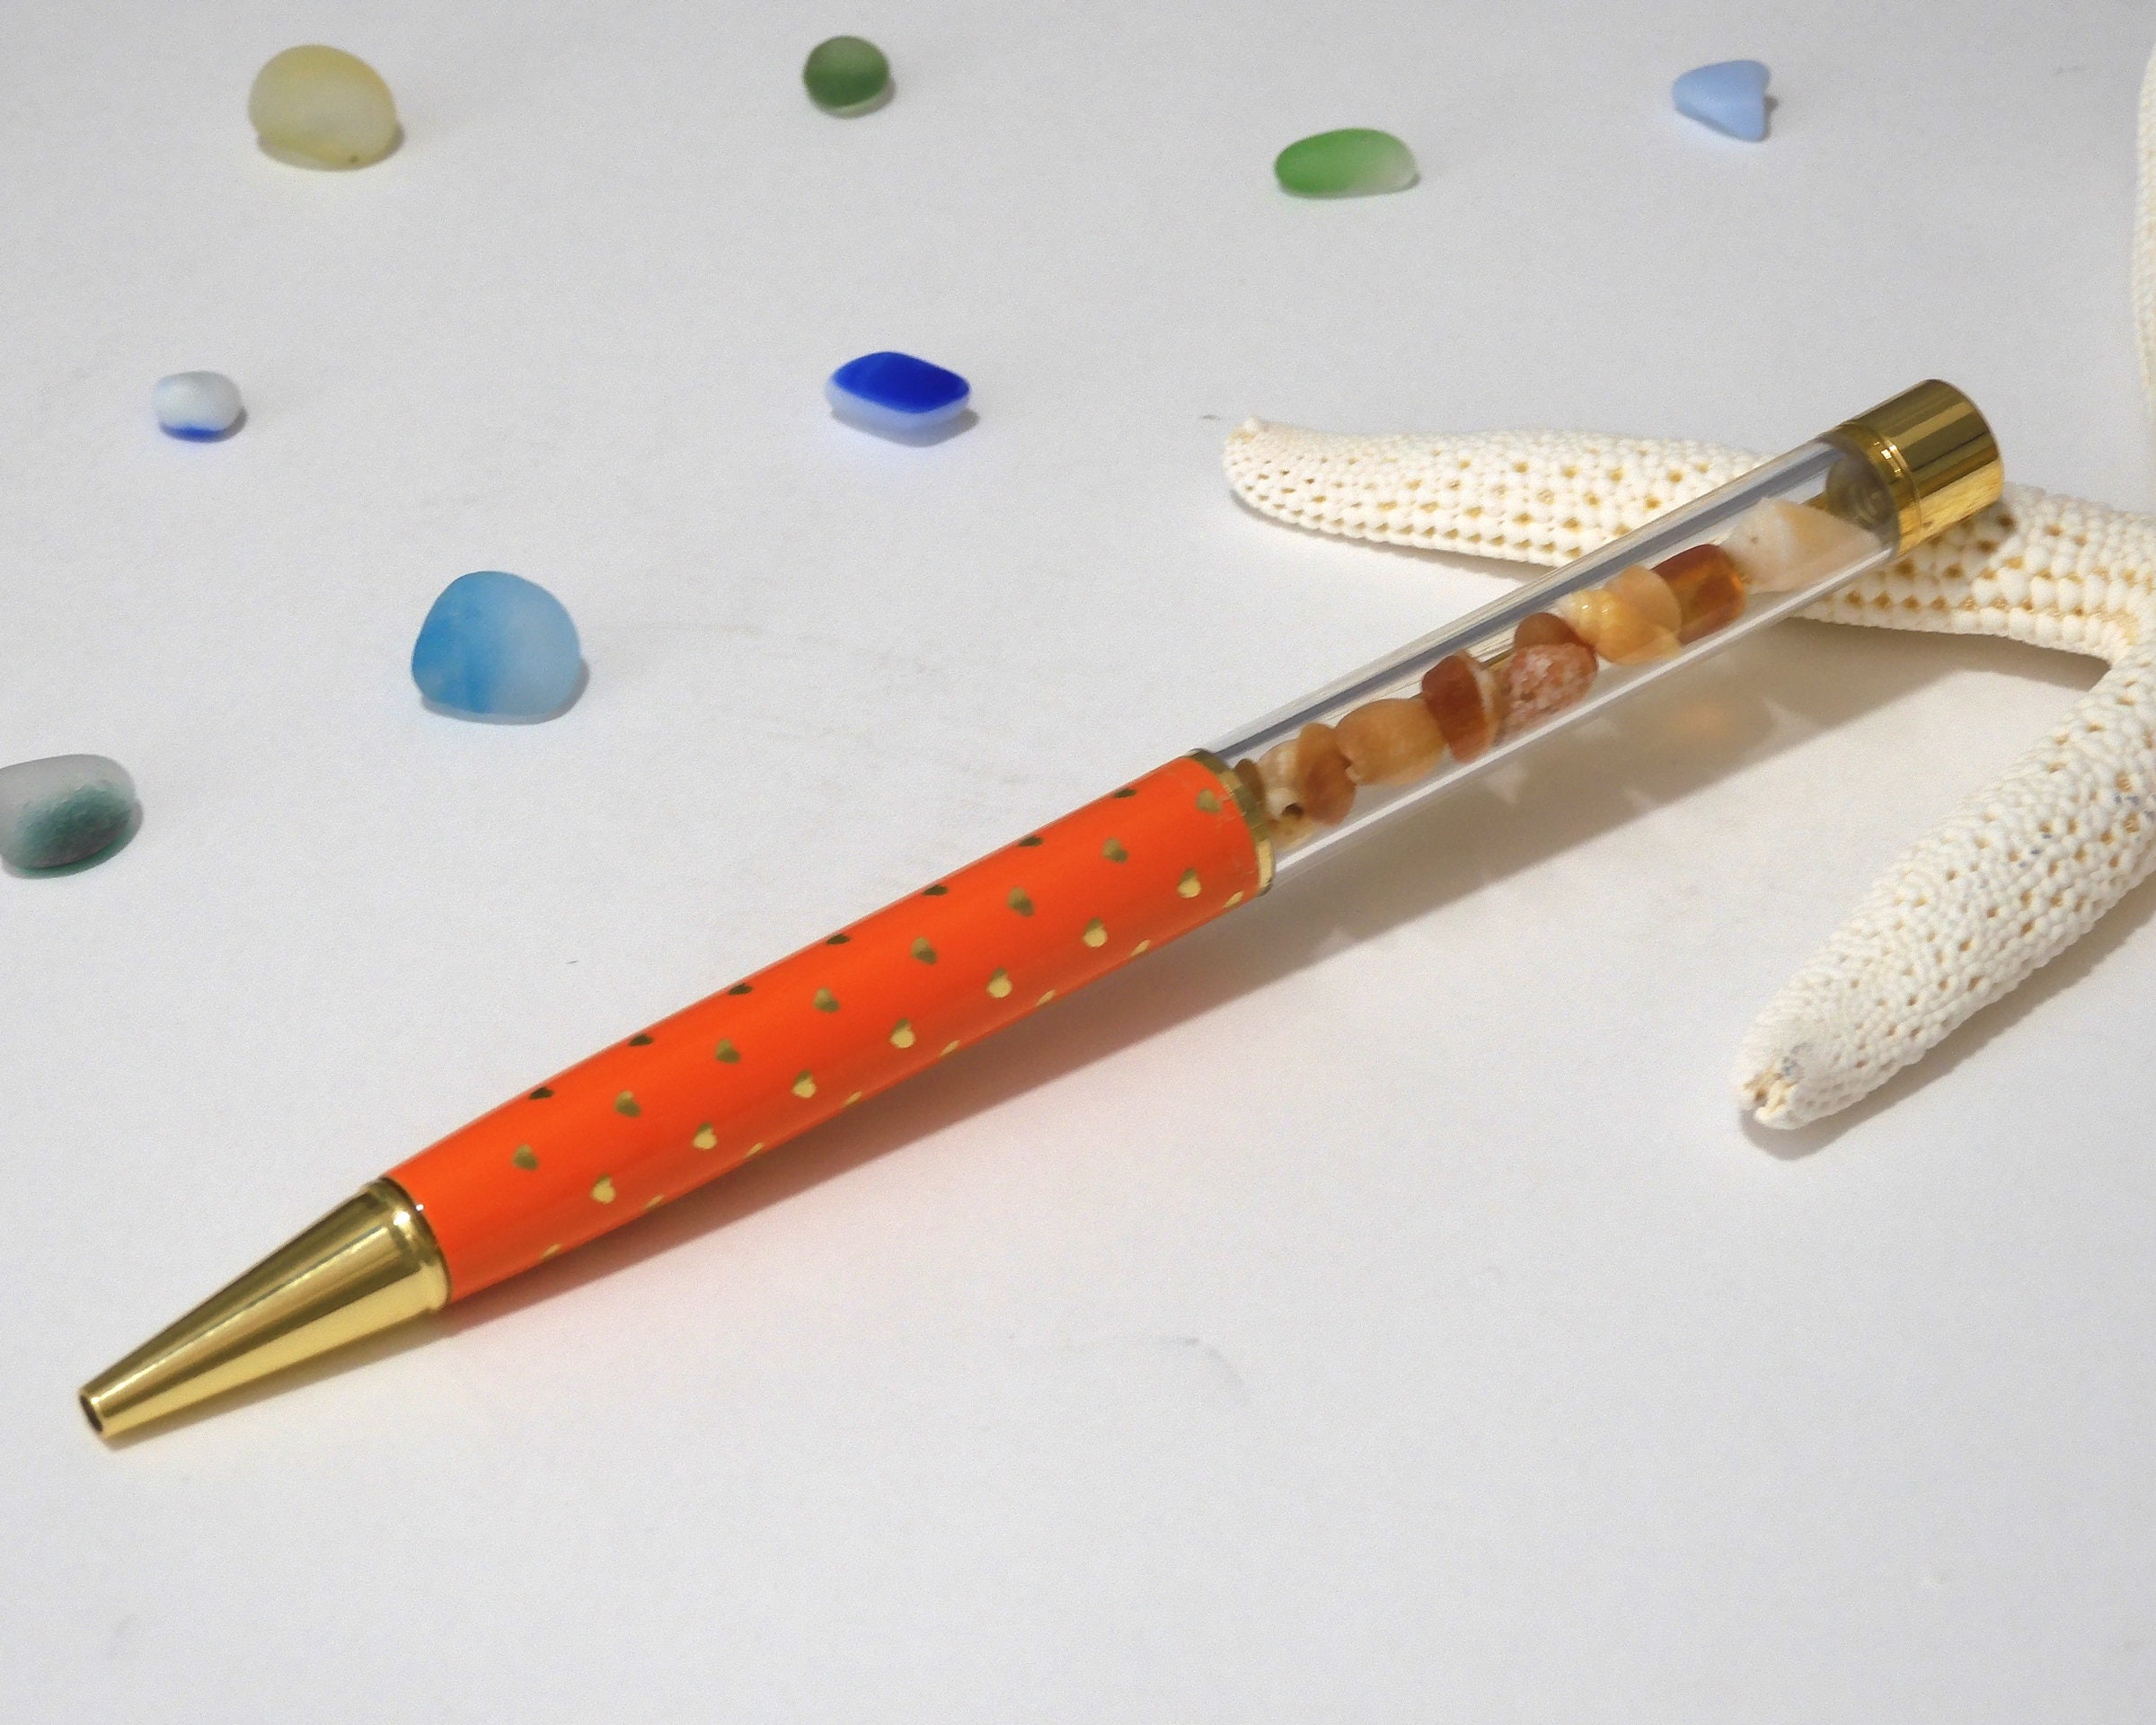 5 PCS Motivational Badass Pen Set for Writing Signature Pens School Office